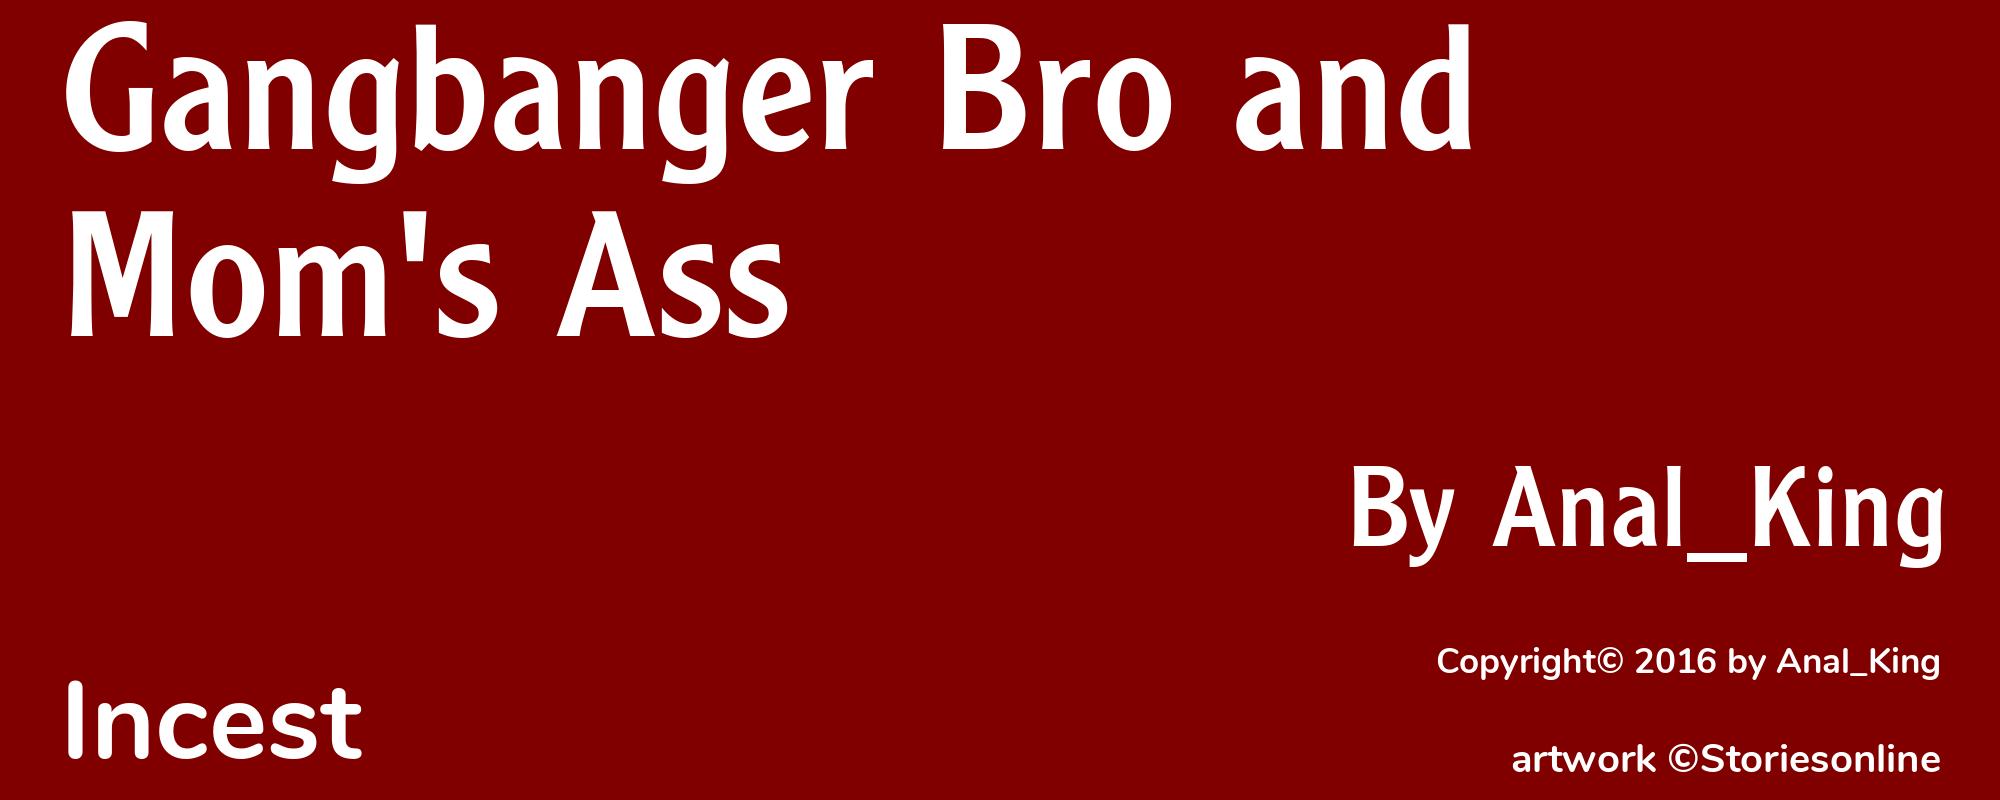 Gangbanger Bro and Mom's Ass - Cover